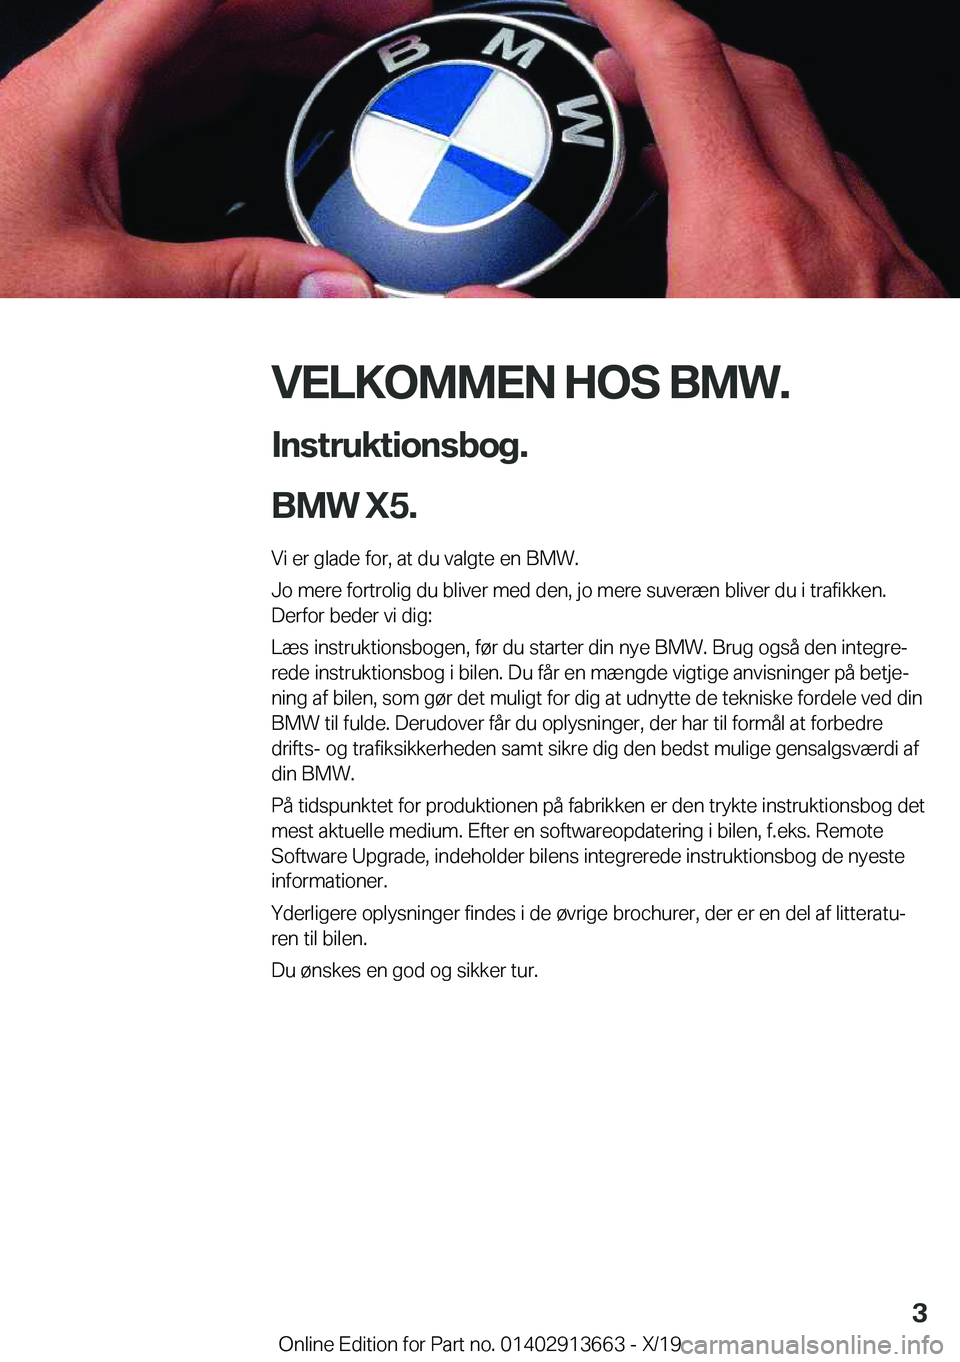 BMW X5 2020  InstruktionsbØger (in Danish) �V�E�L�K�O�M�M�E�N��H�O�S��B�M�W�.
�I�n�s�t�r�u�k�t�i�o�n�s�b�o�g�.
�B�M�W��X�5�. �V�i��e�r��g�l�a�d�e��f�o�r�,��a�t��d�u��v�a�l�g�t�e��e�n��B�M�W�.
�J�o��m�e�r�e��f�o�r�t�r�o�l�i�g��d�u